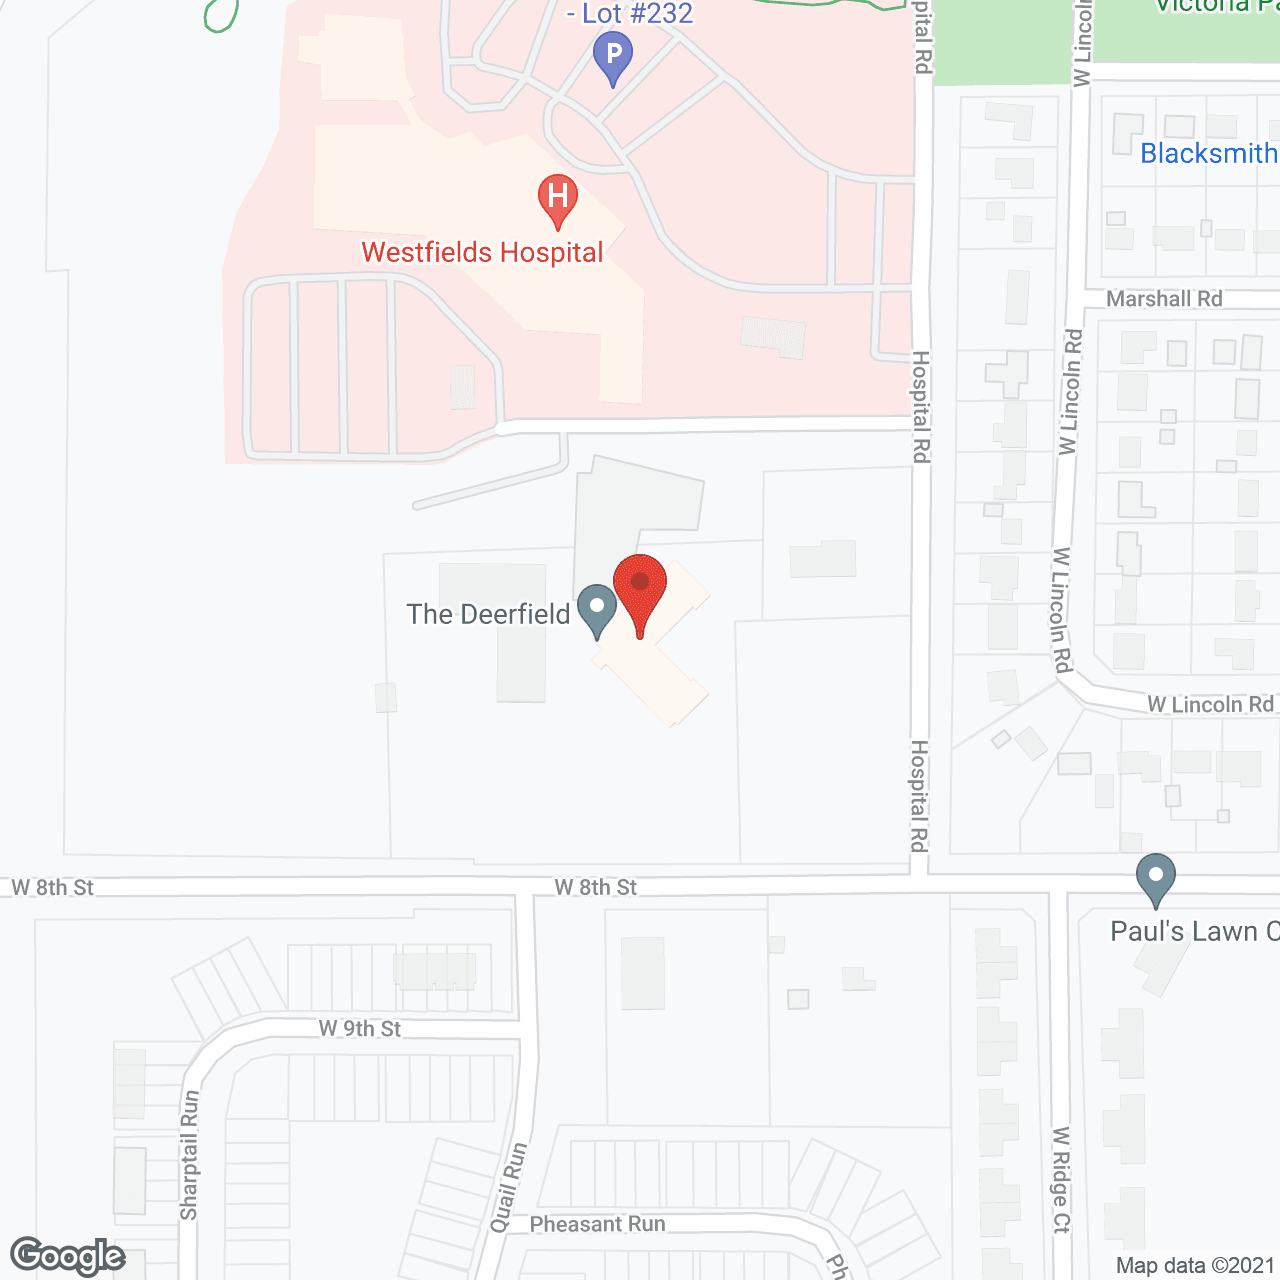 The Deerfield in google map